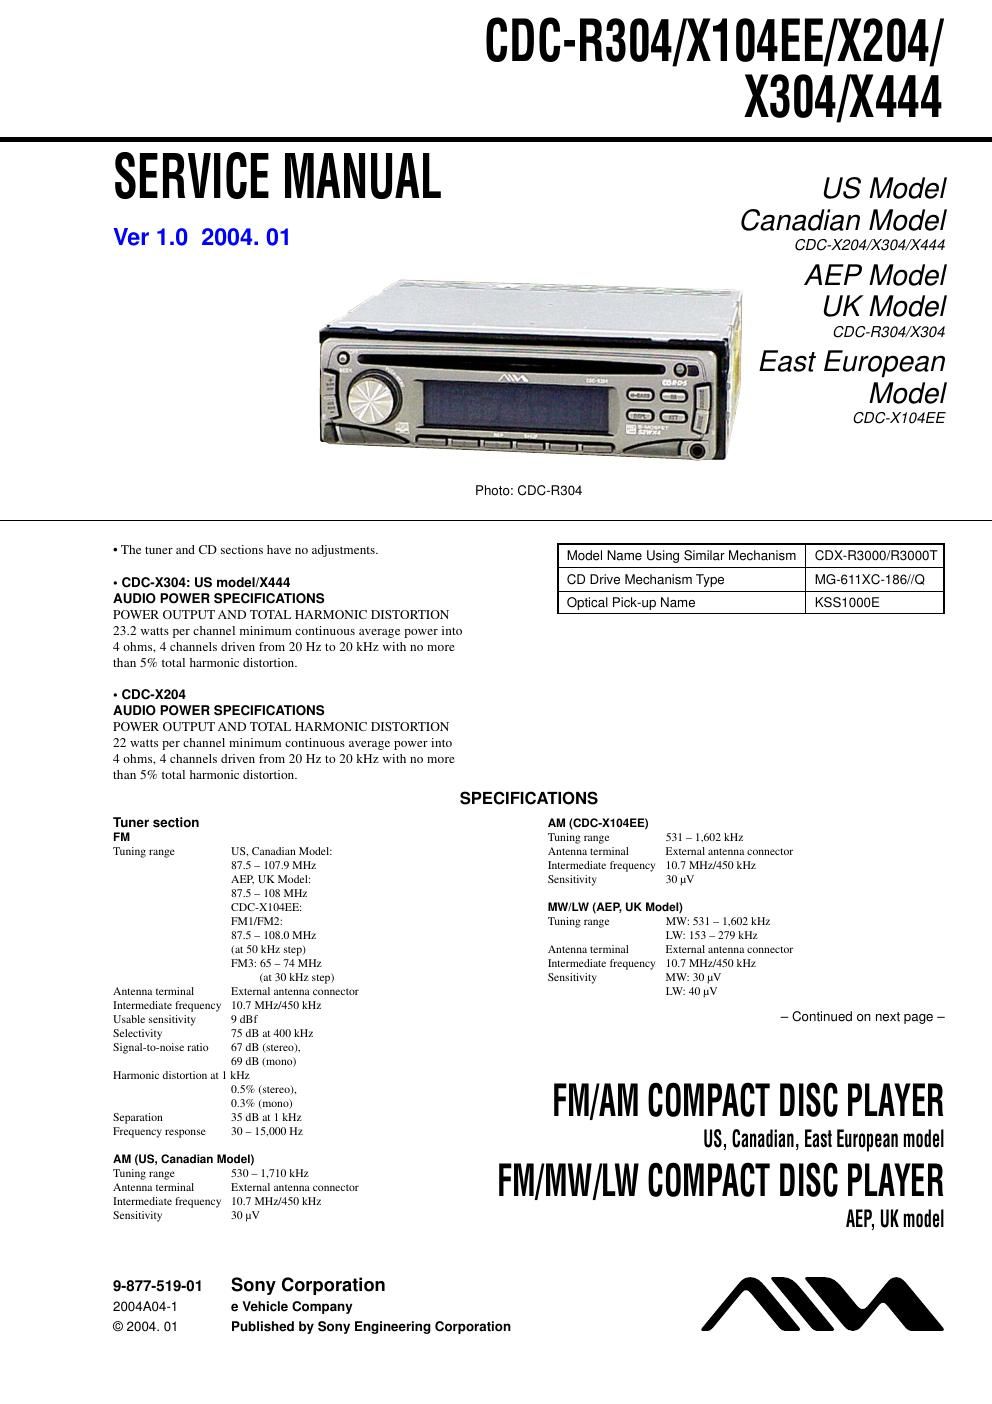 sony cdc r 304 service manual